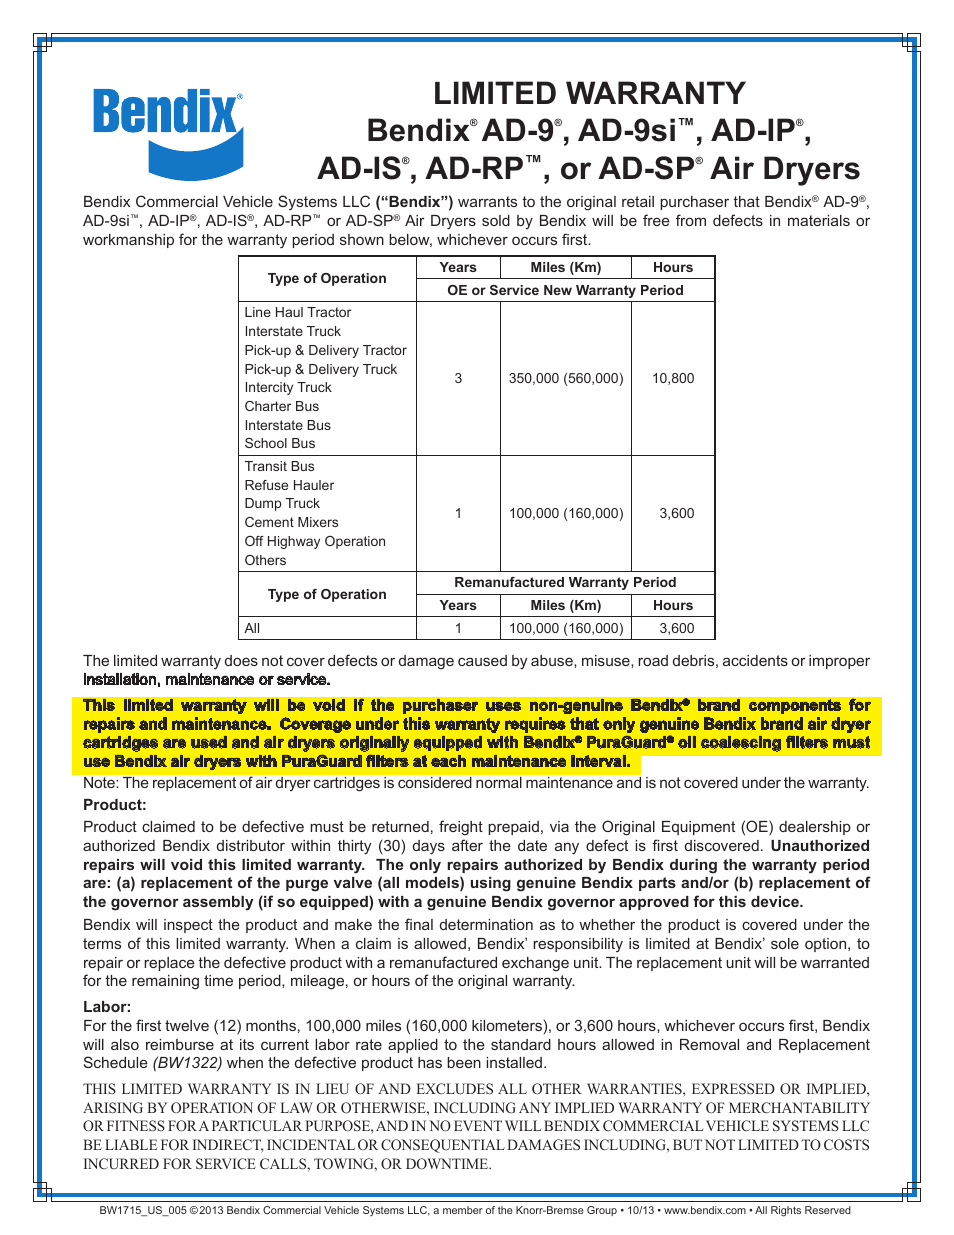 AD-IP Air Dryers